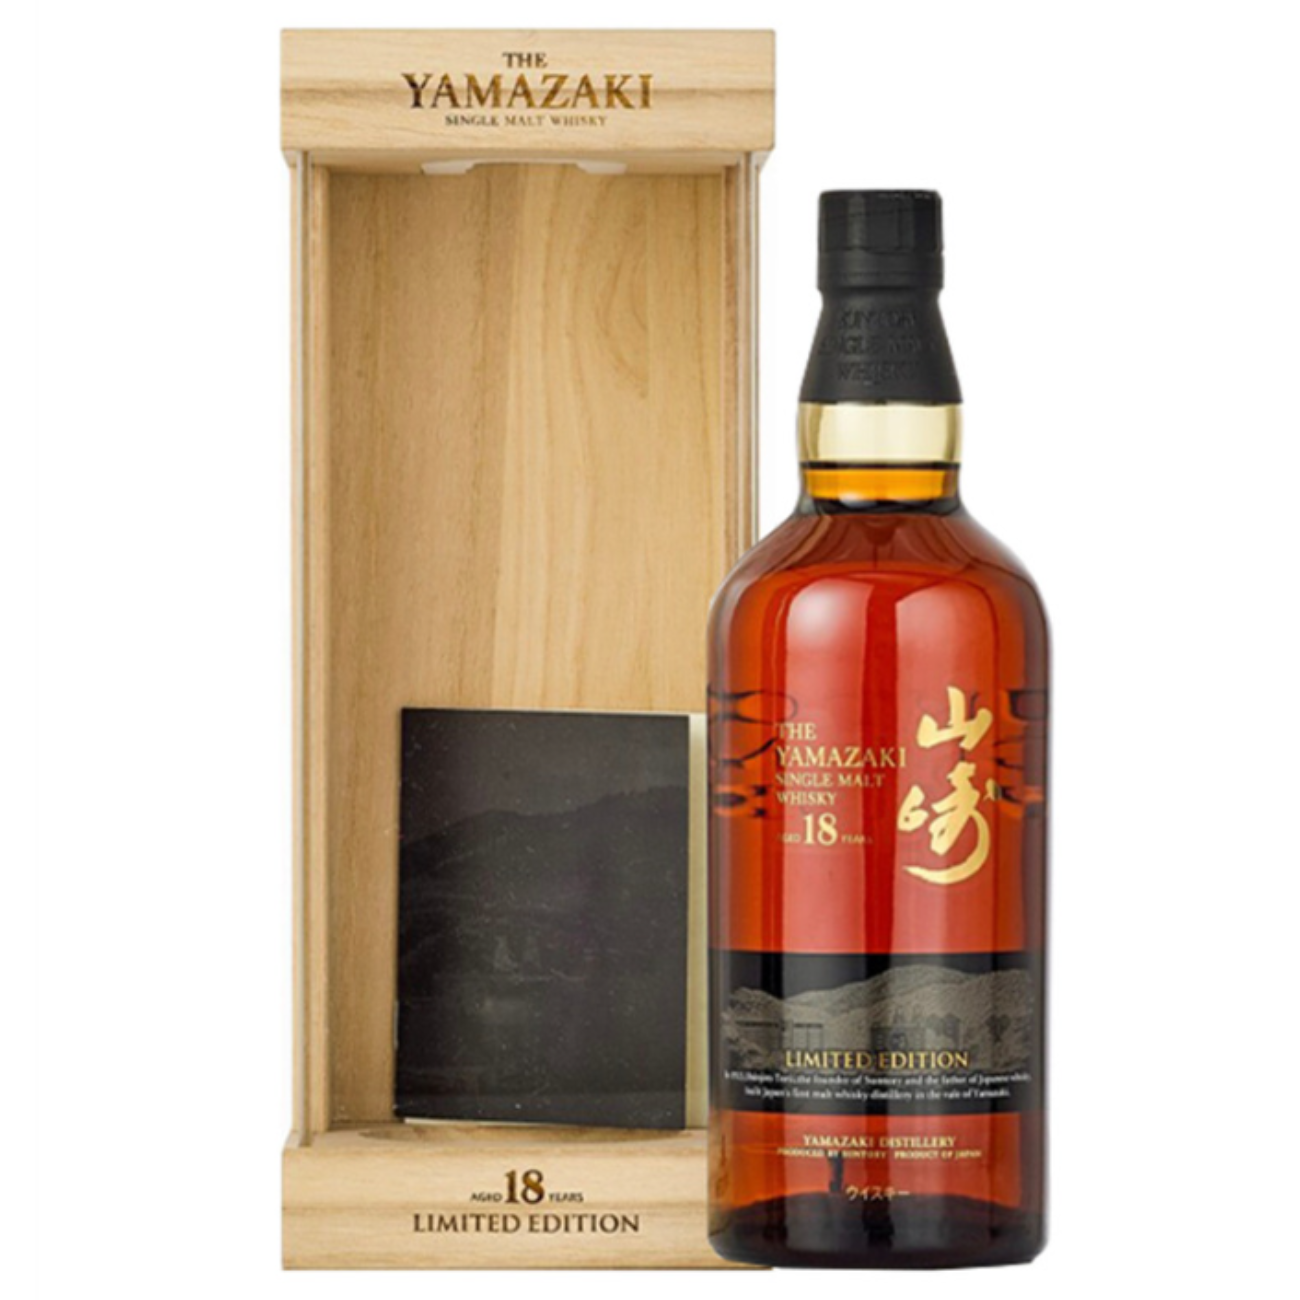 The Yamazaki 18 limited edition